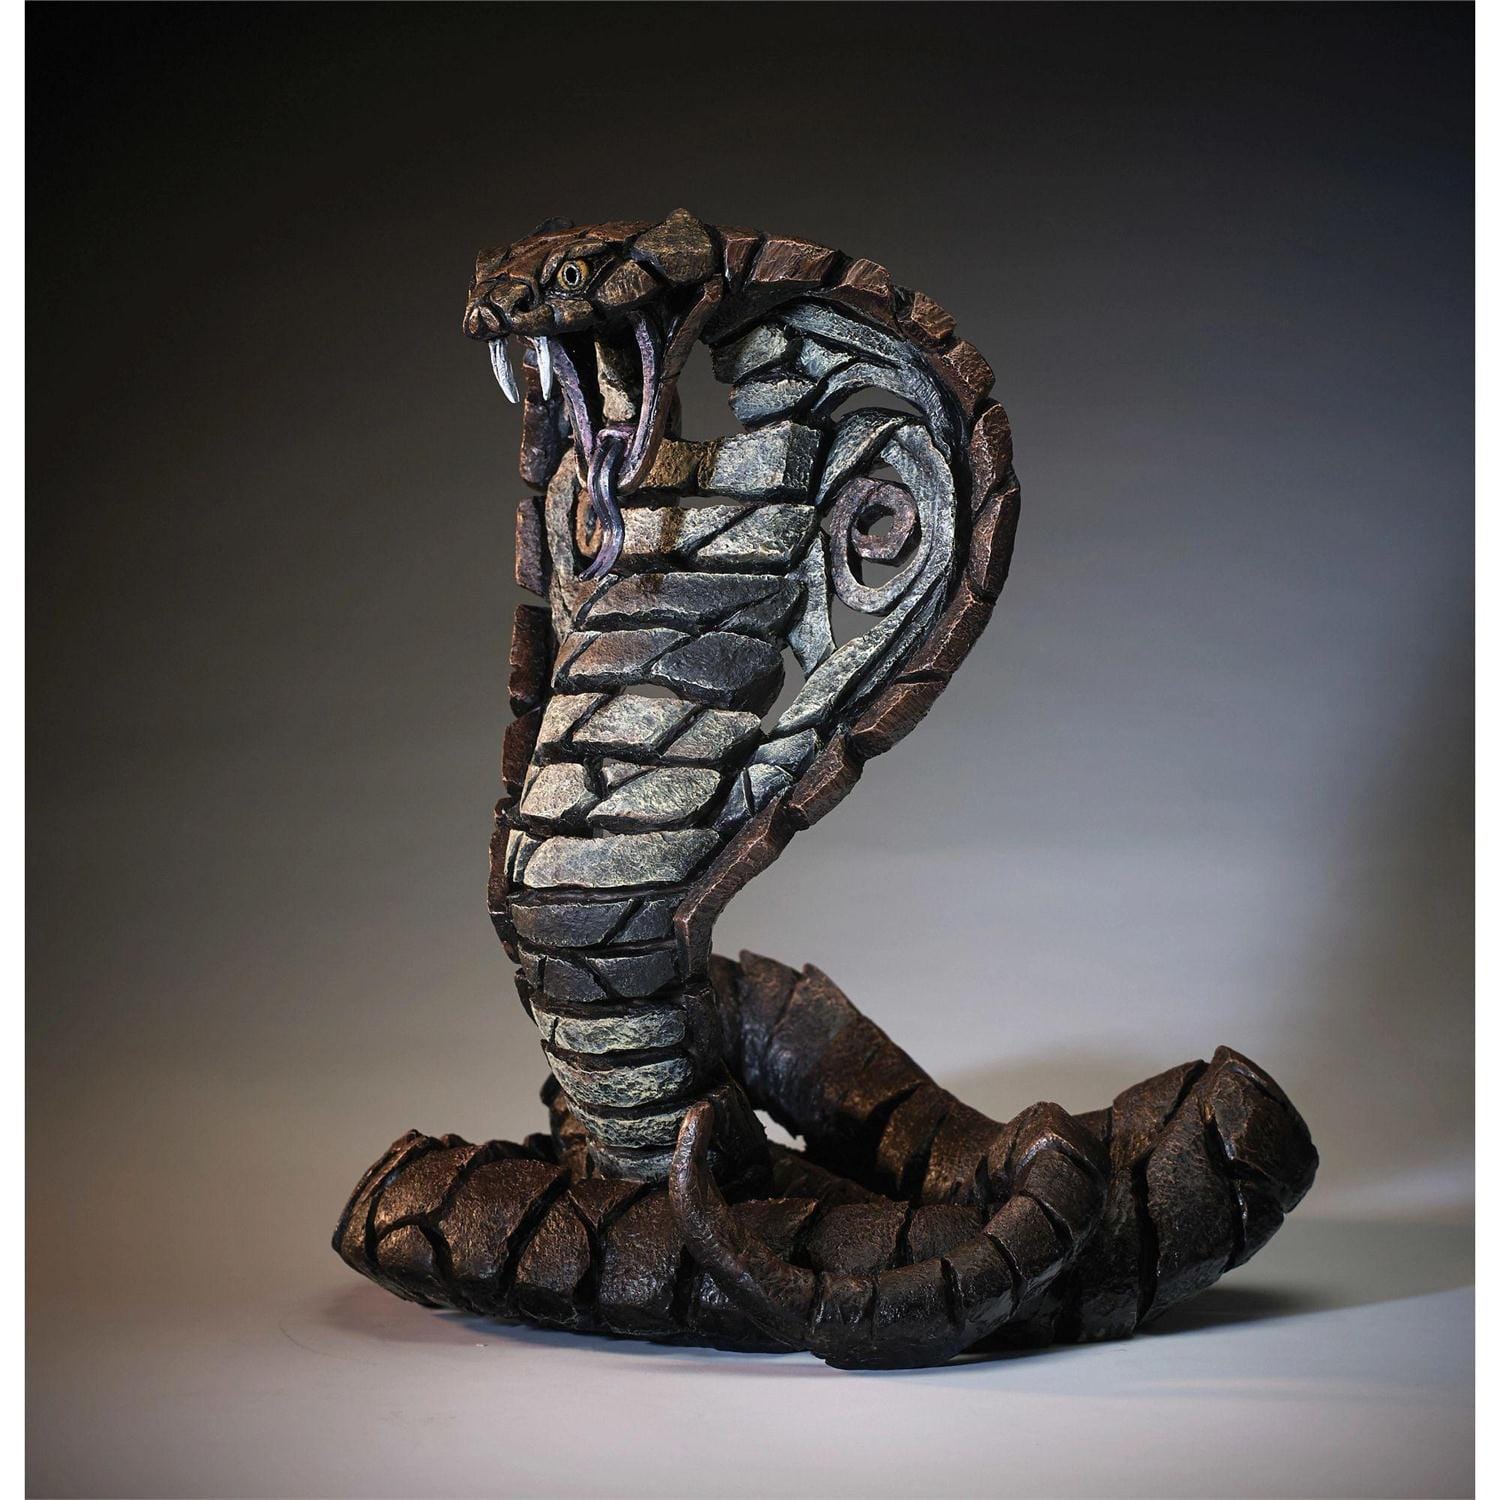 The Lair Cobra Edge Sculpture